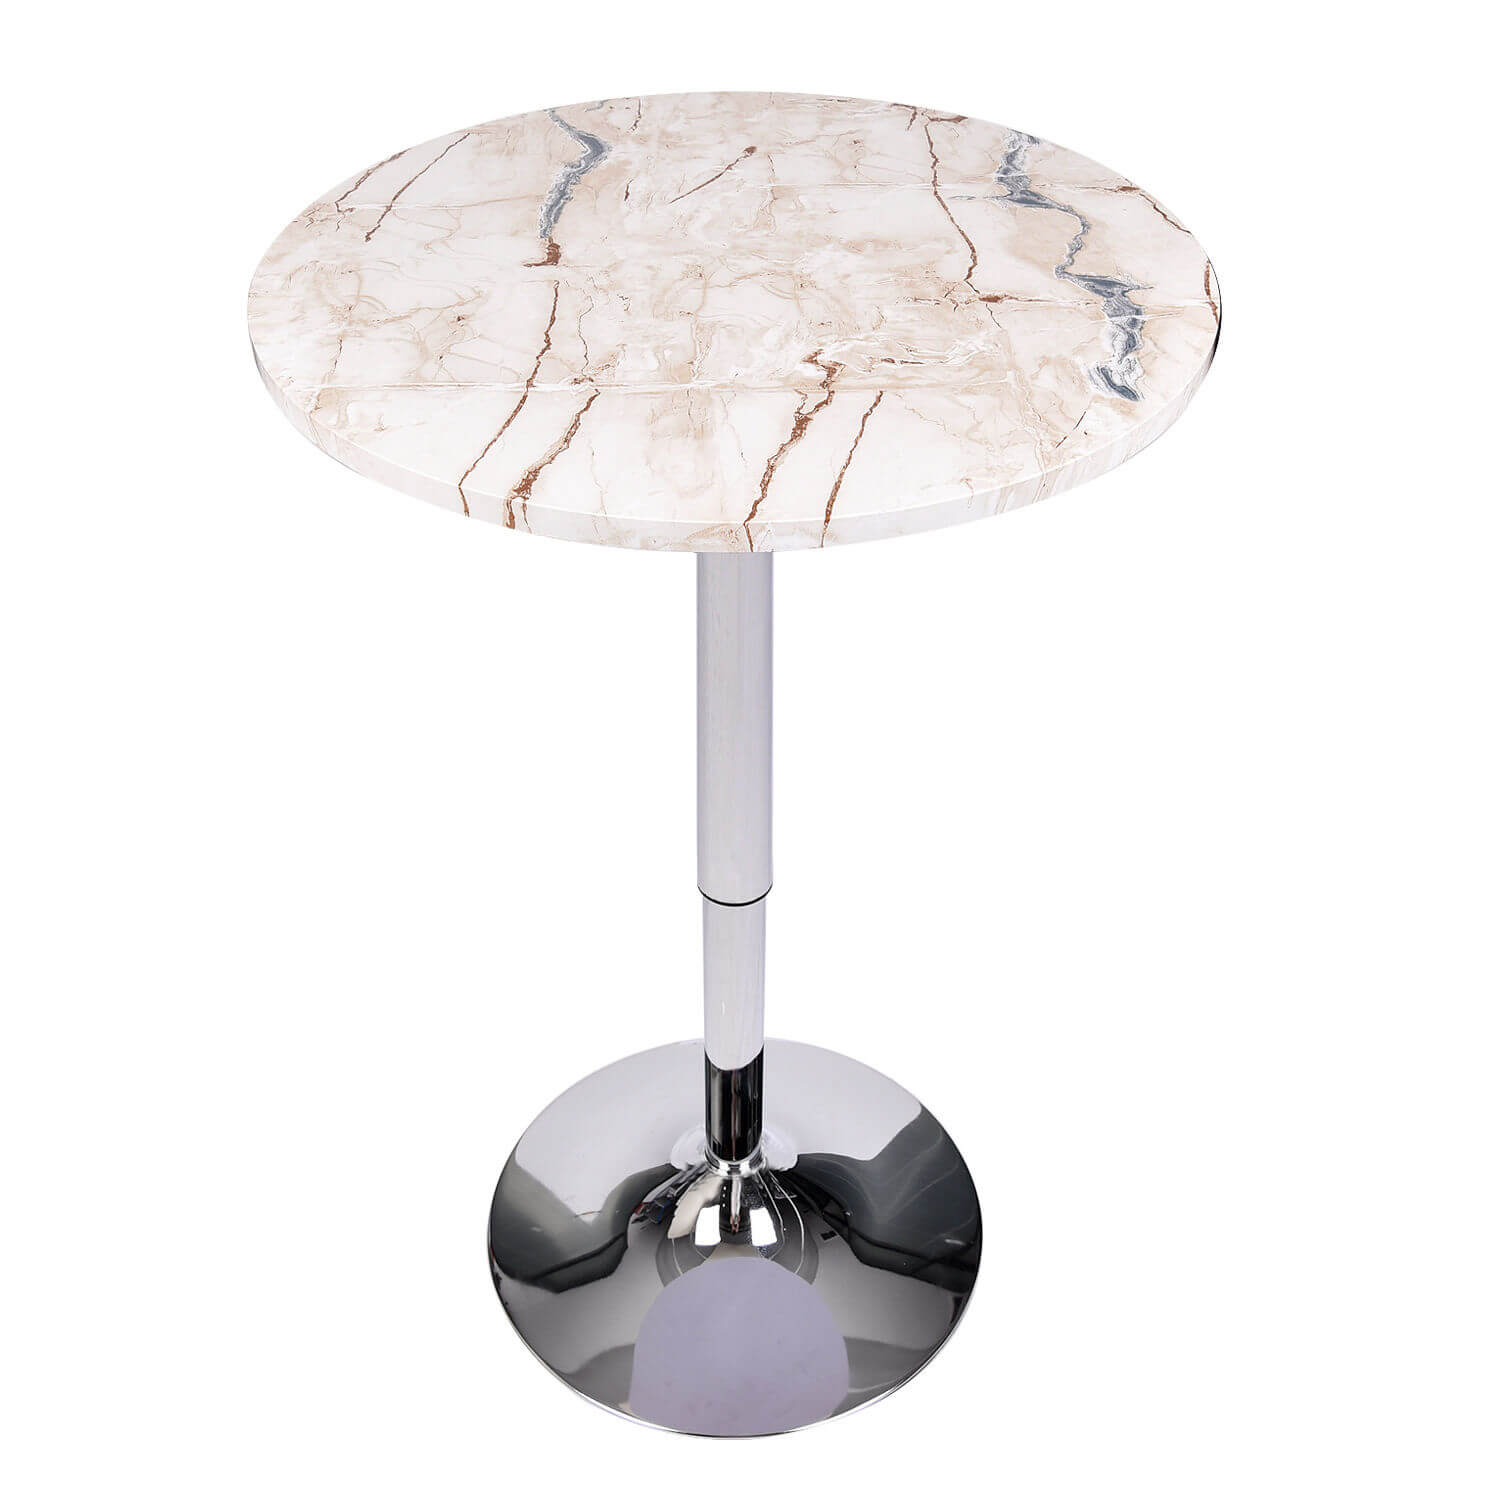 Elecwish marble white bar table